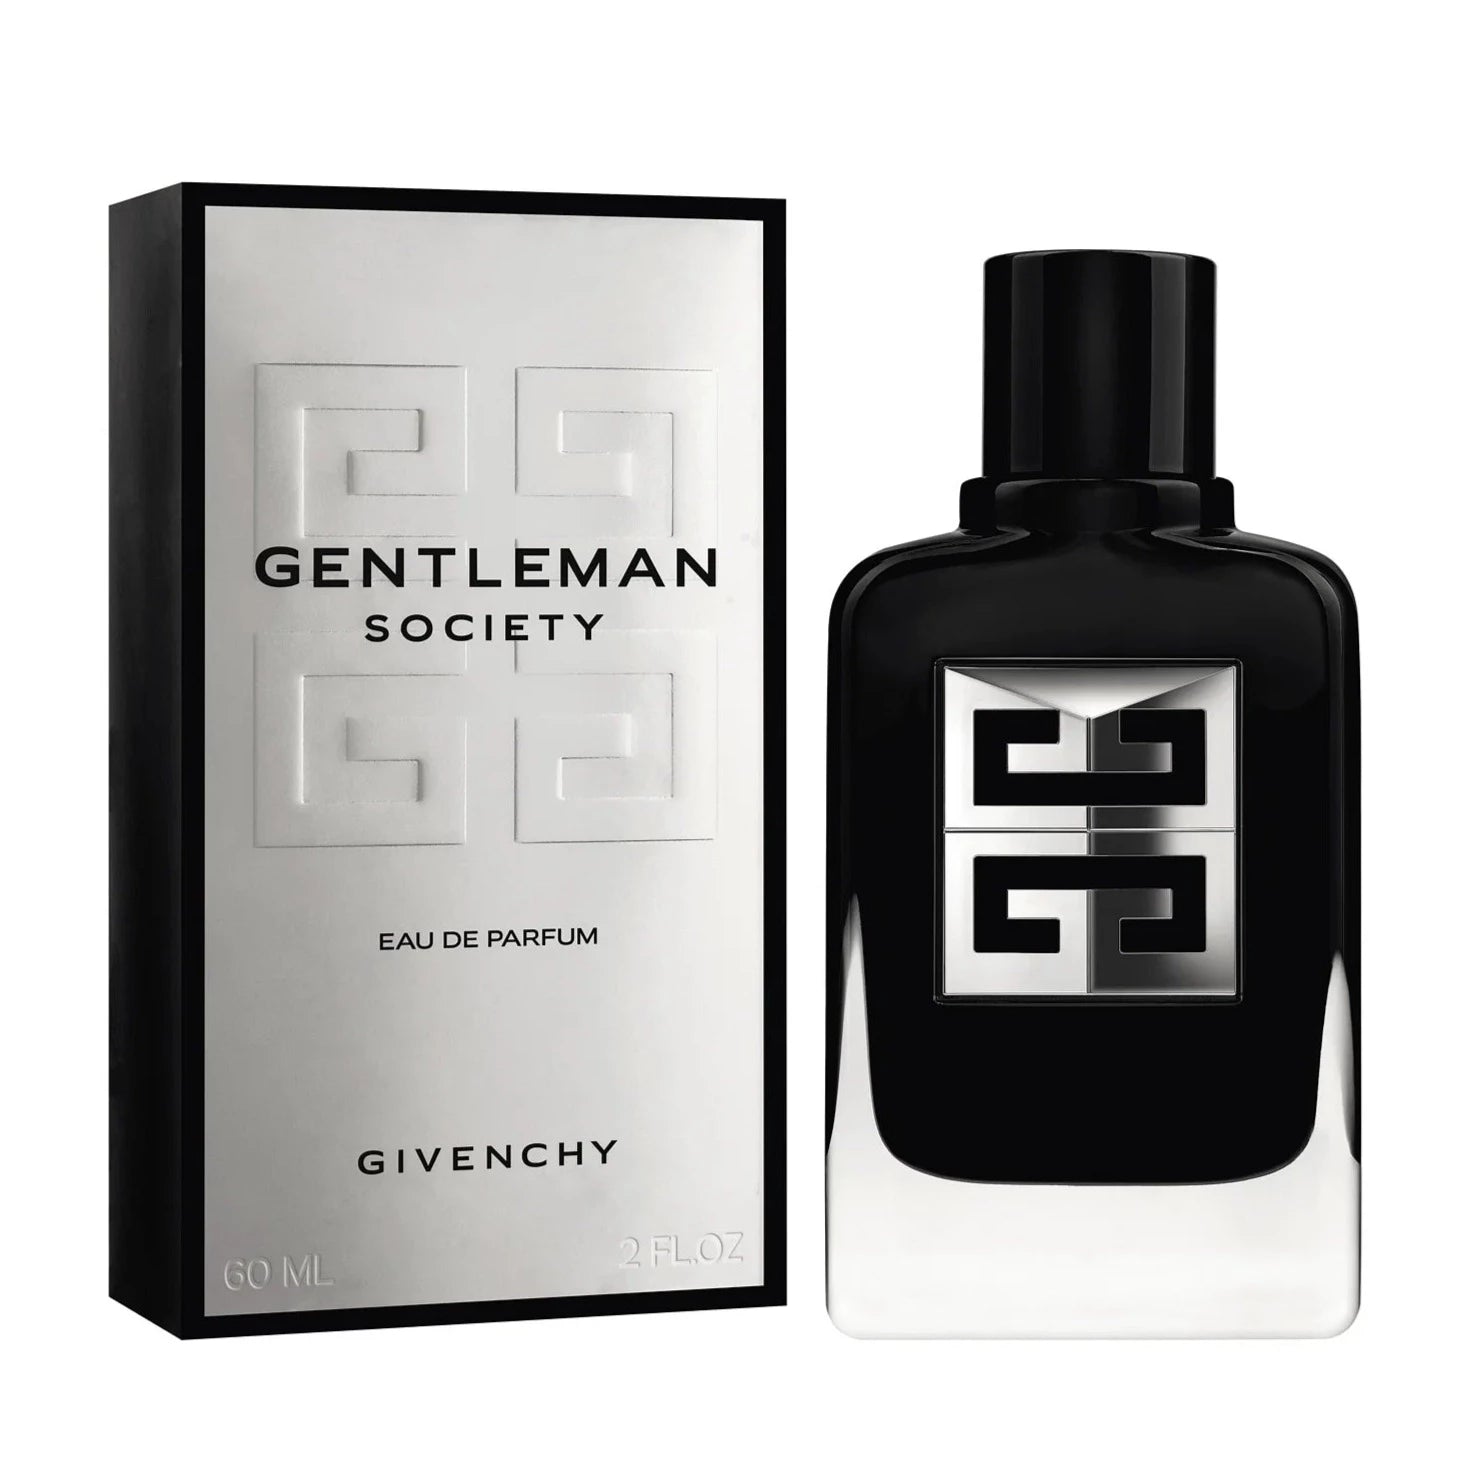 Givenchy Gentleman Society EDP | My Perfume Shop Australia